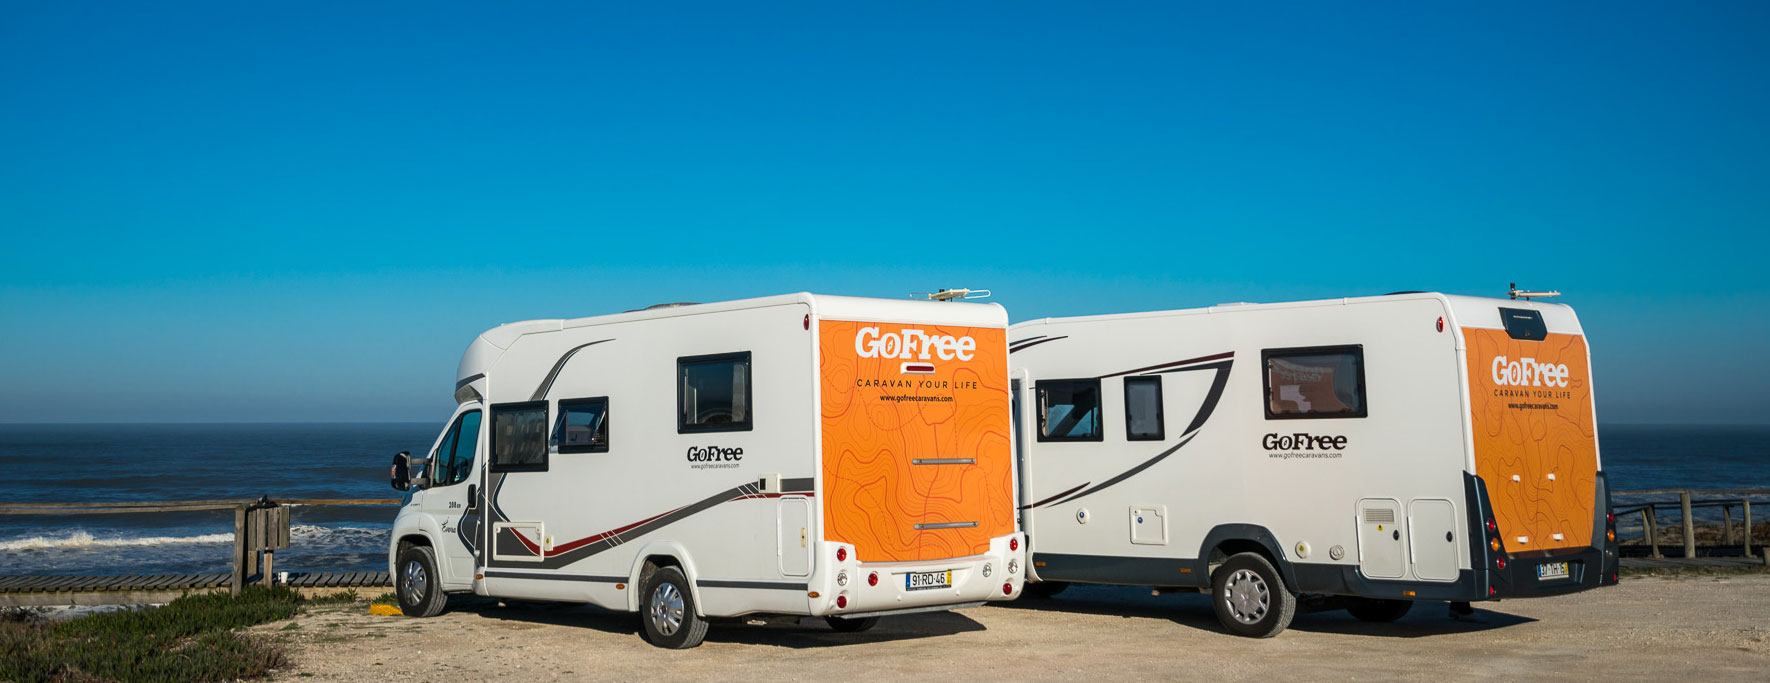 GoFree Caravans